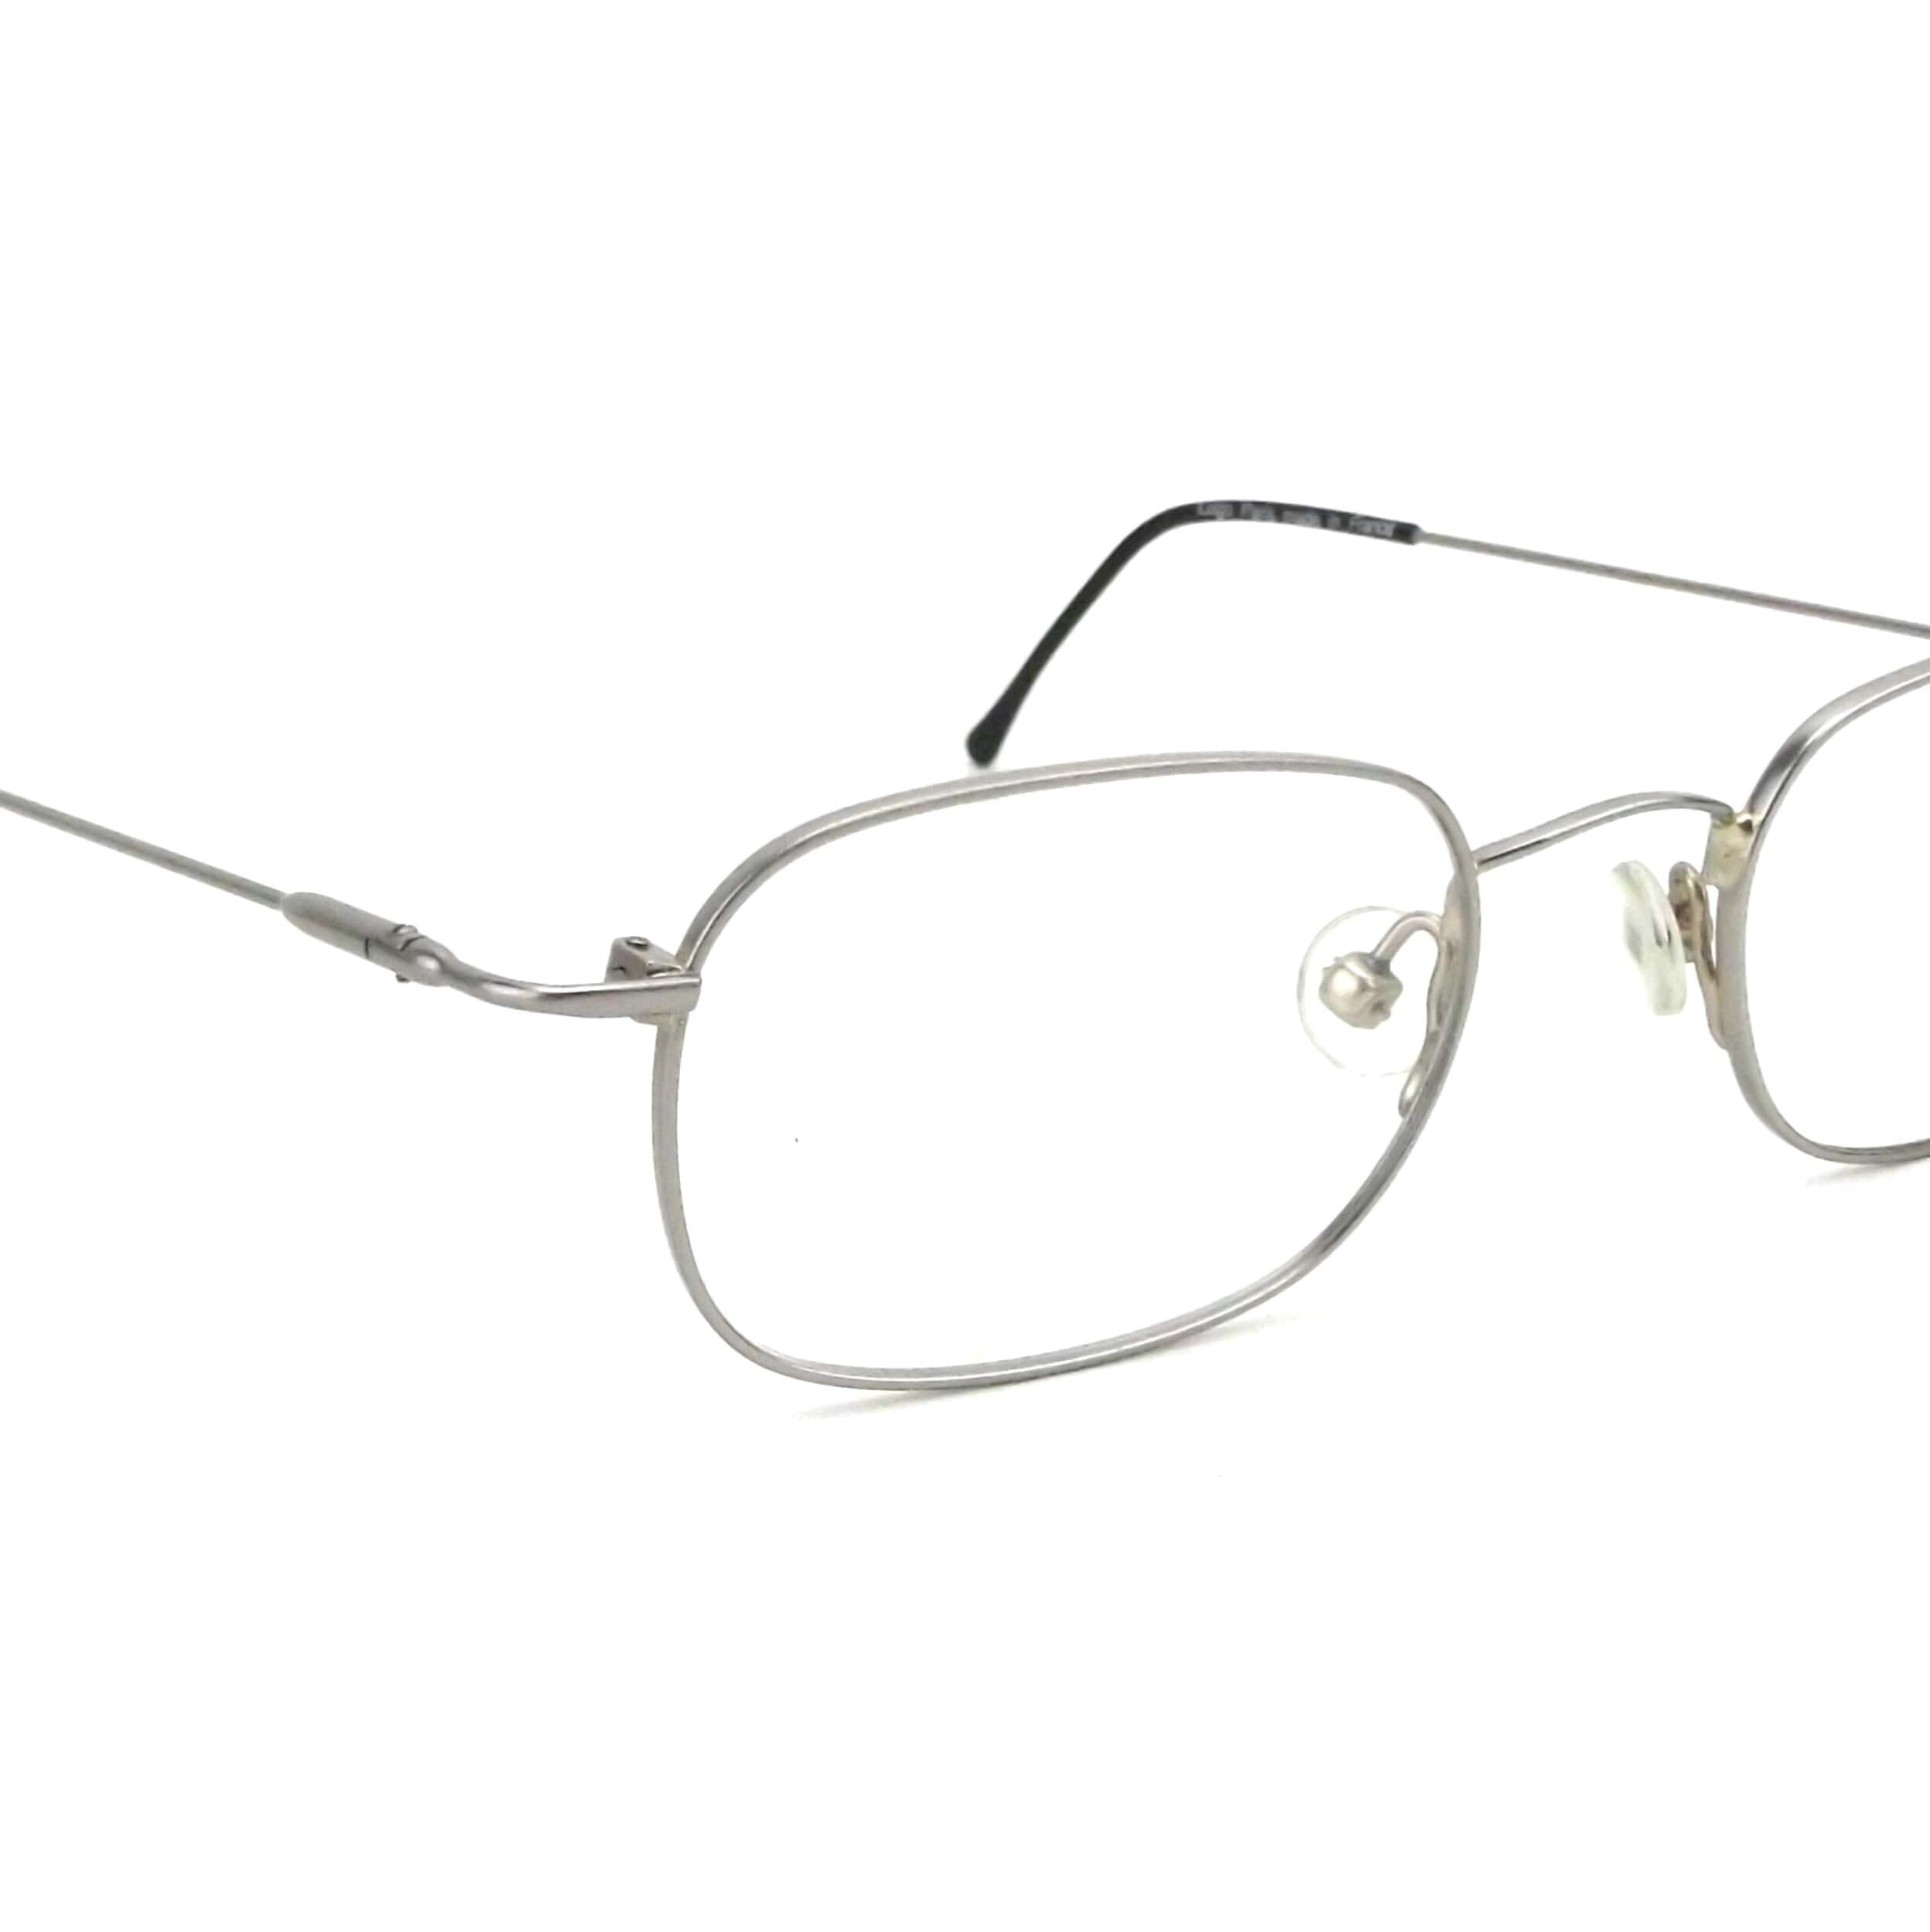 Rectangular wire eyeglasses matte silver black eye glasses | Etsy